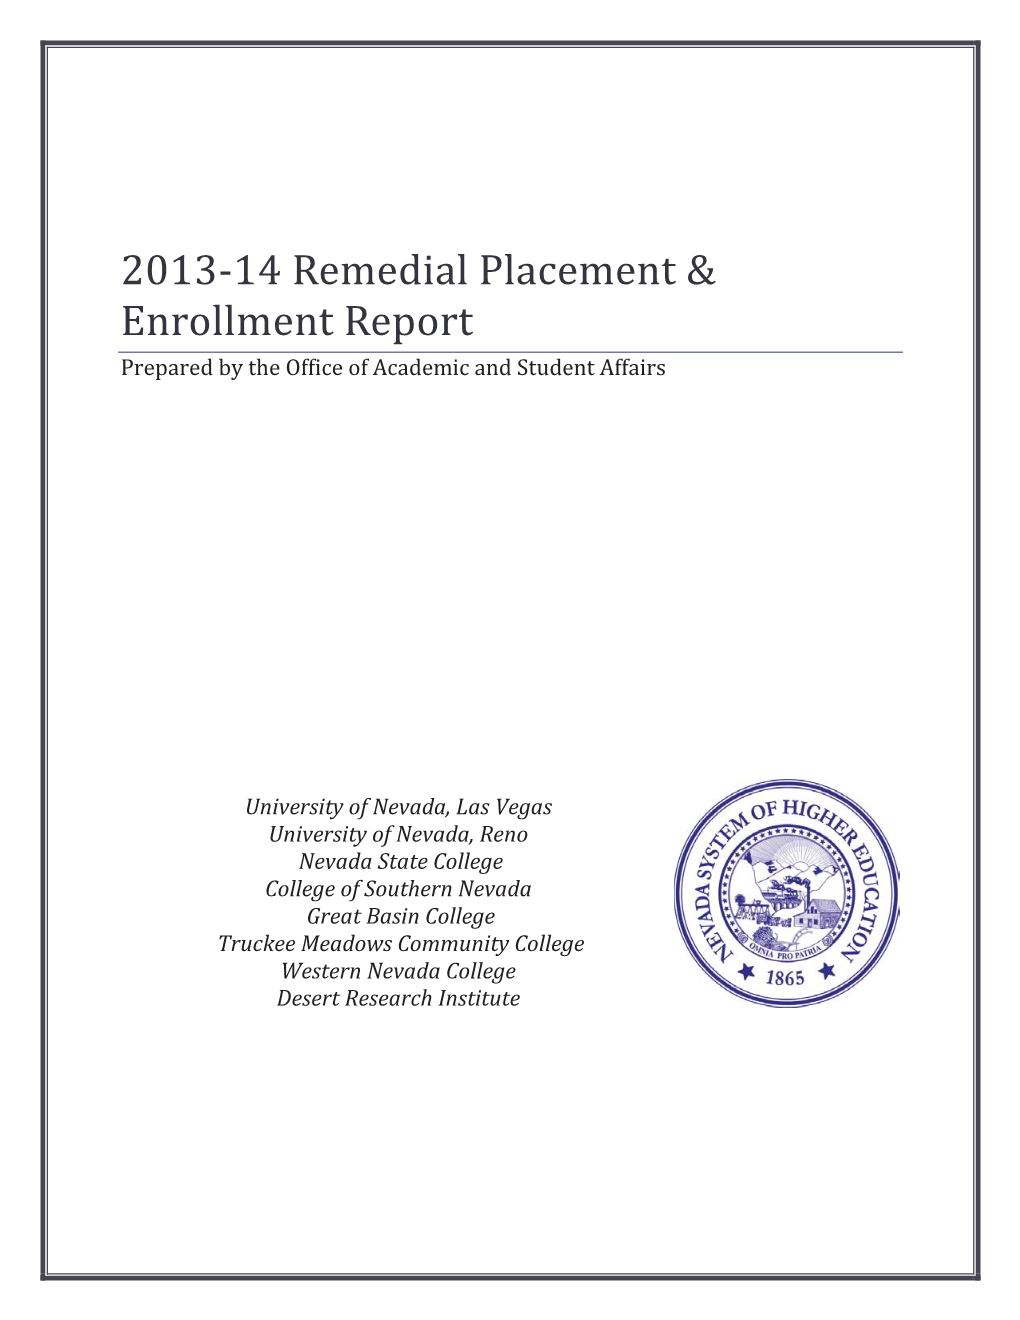 Remedial Placement & Enrollment Report